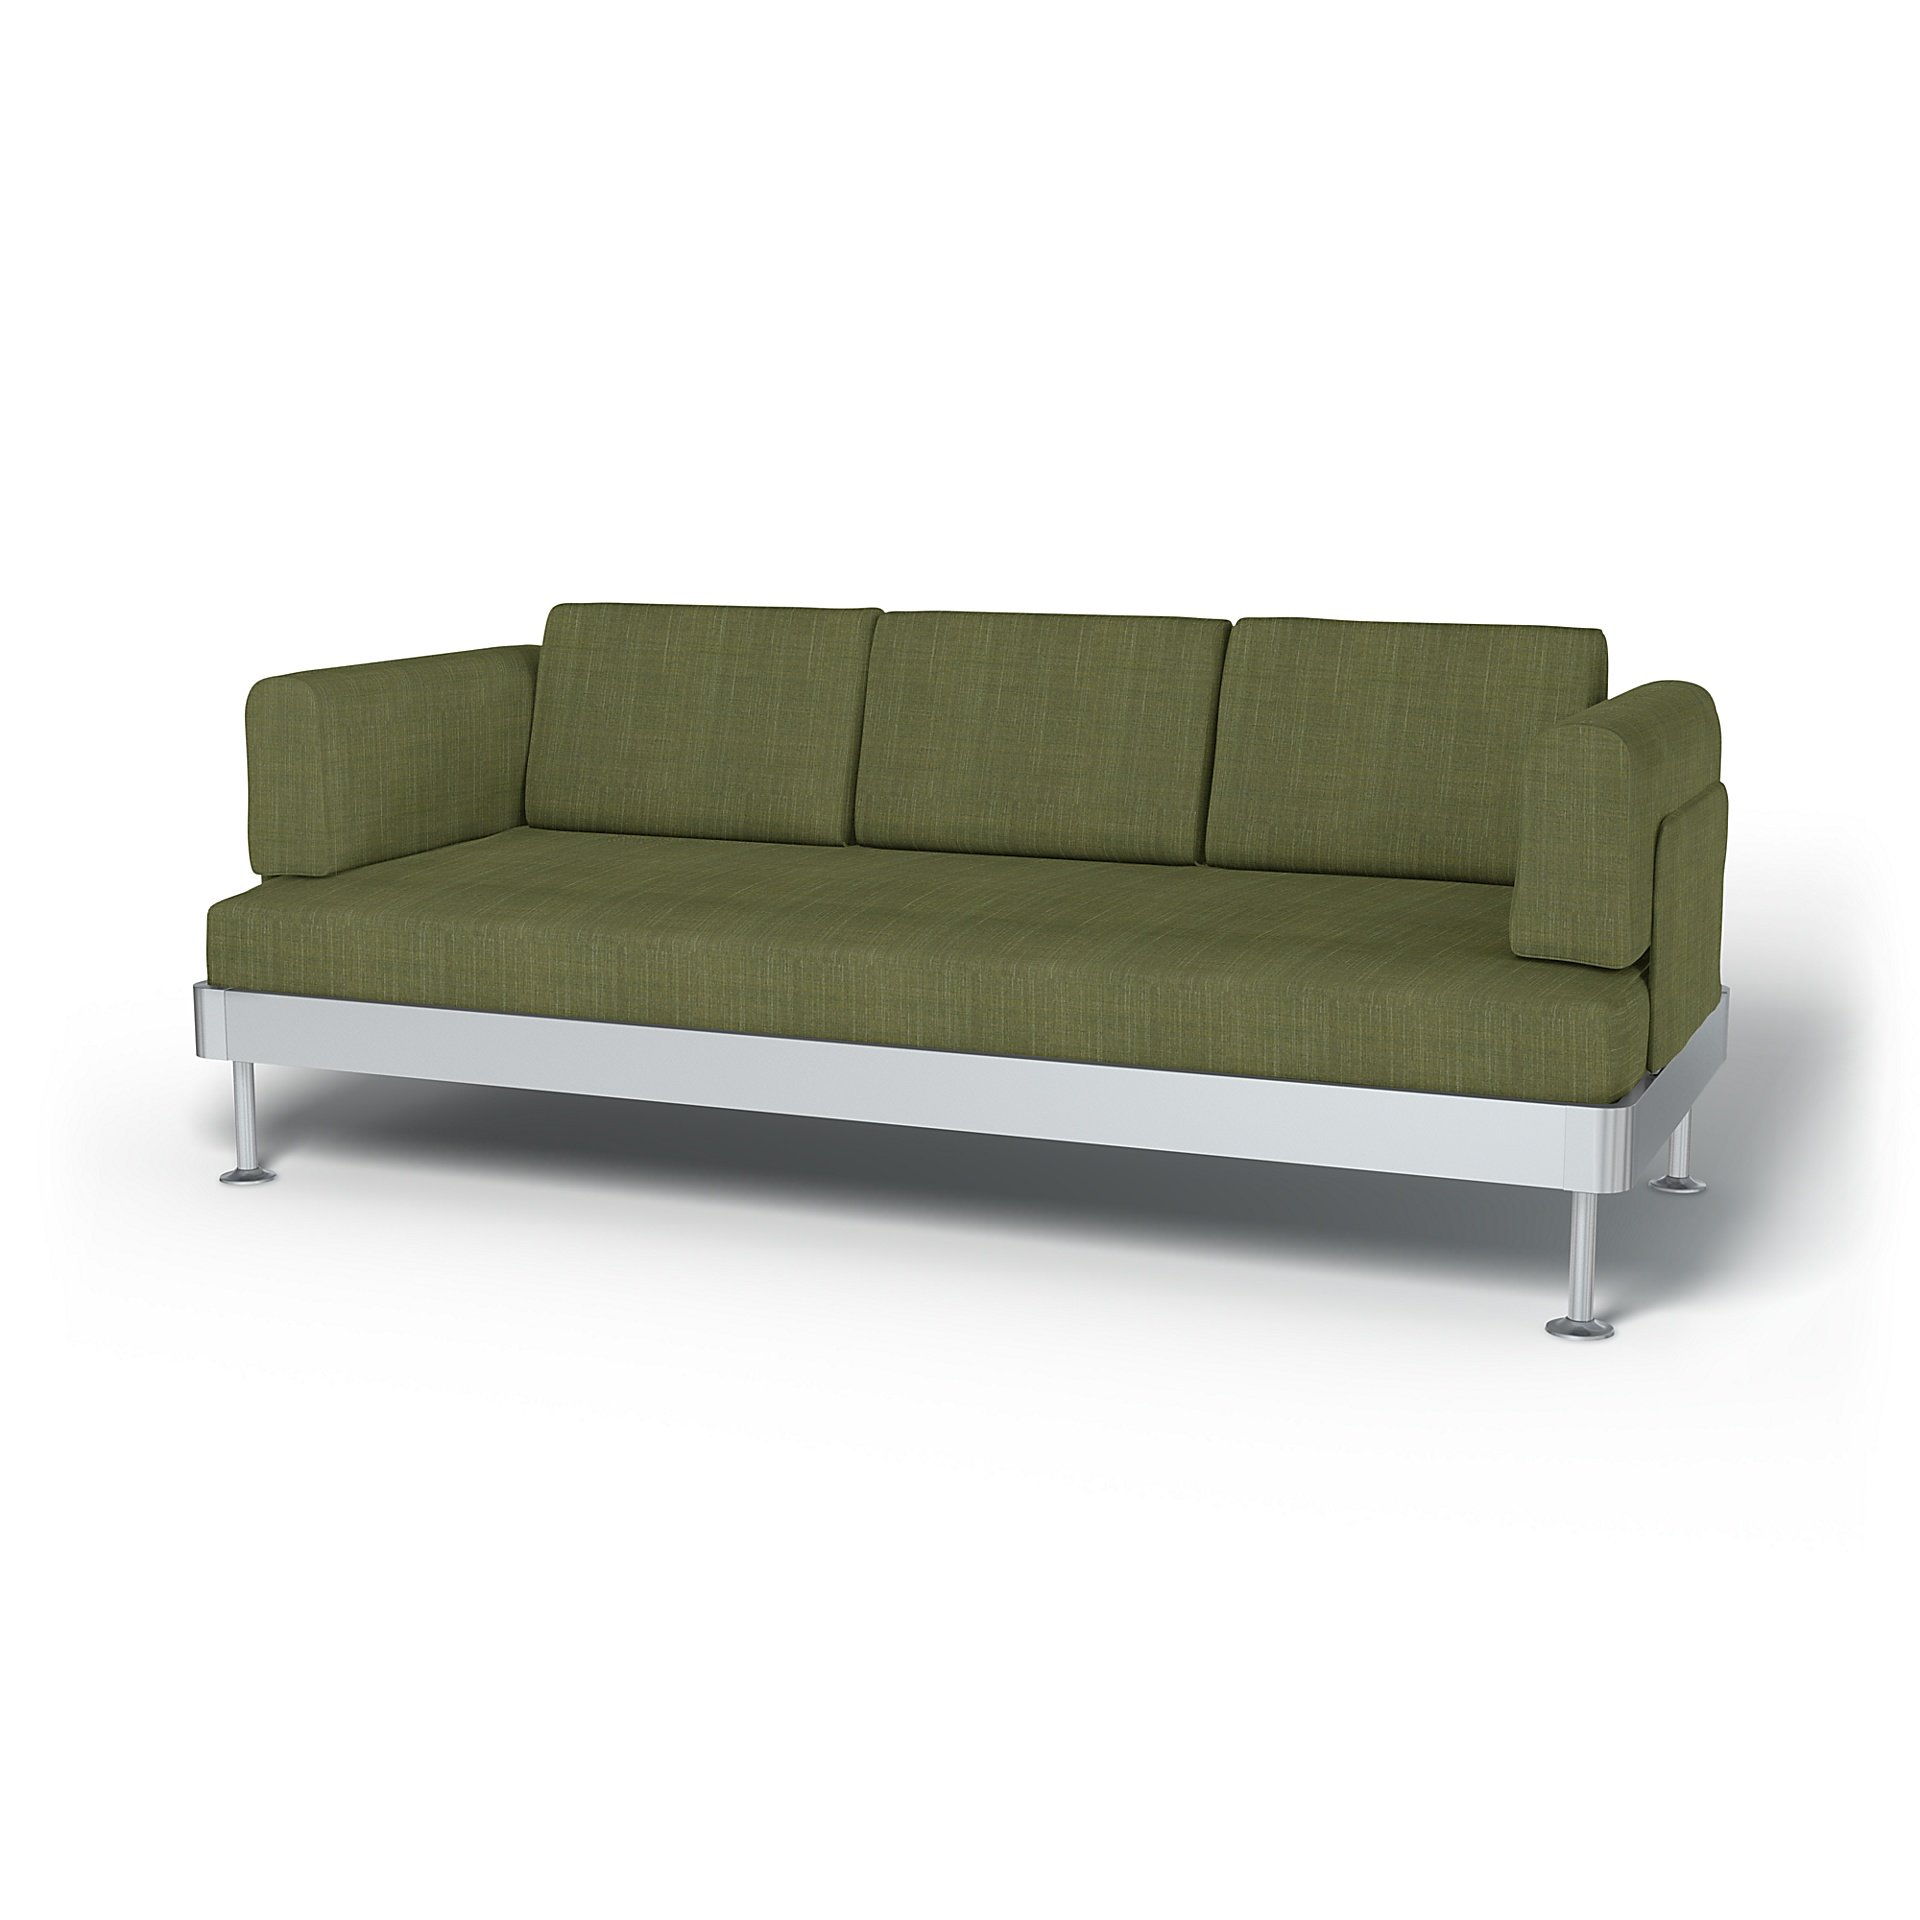 IKEA - Delaktig 3 Seater Sofa Cover, Moss Green, Boucle & Texture - Bemz